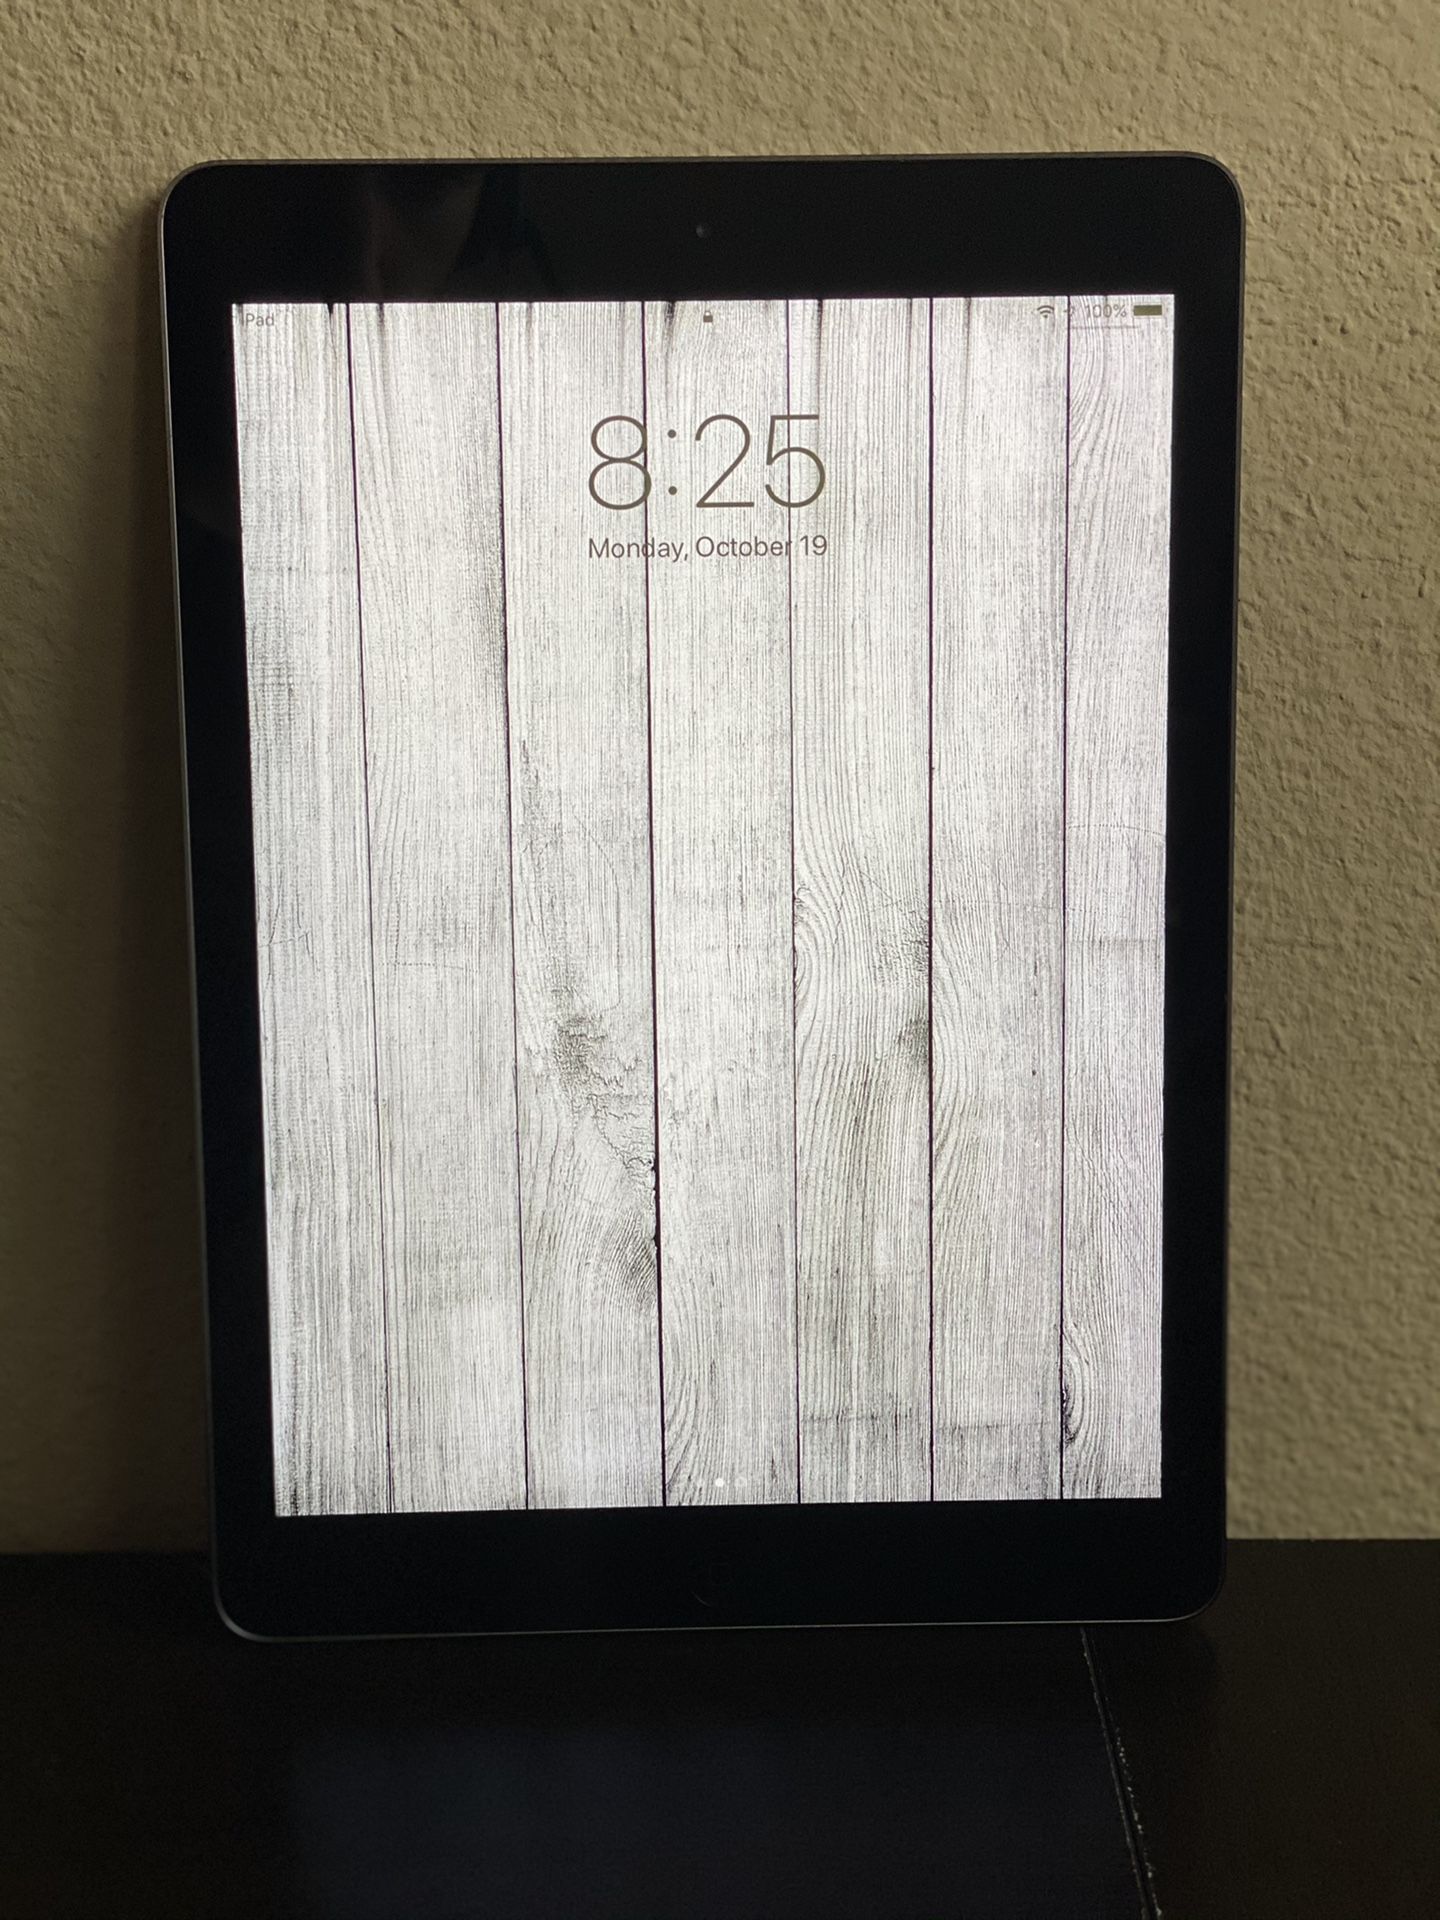 Apple iPad Air (16GB, Wi-Fi, Black w/Space Grey)